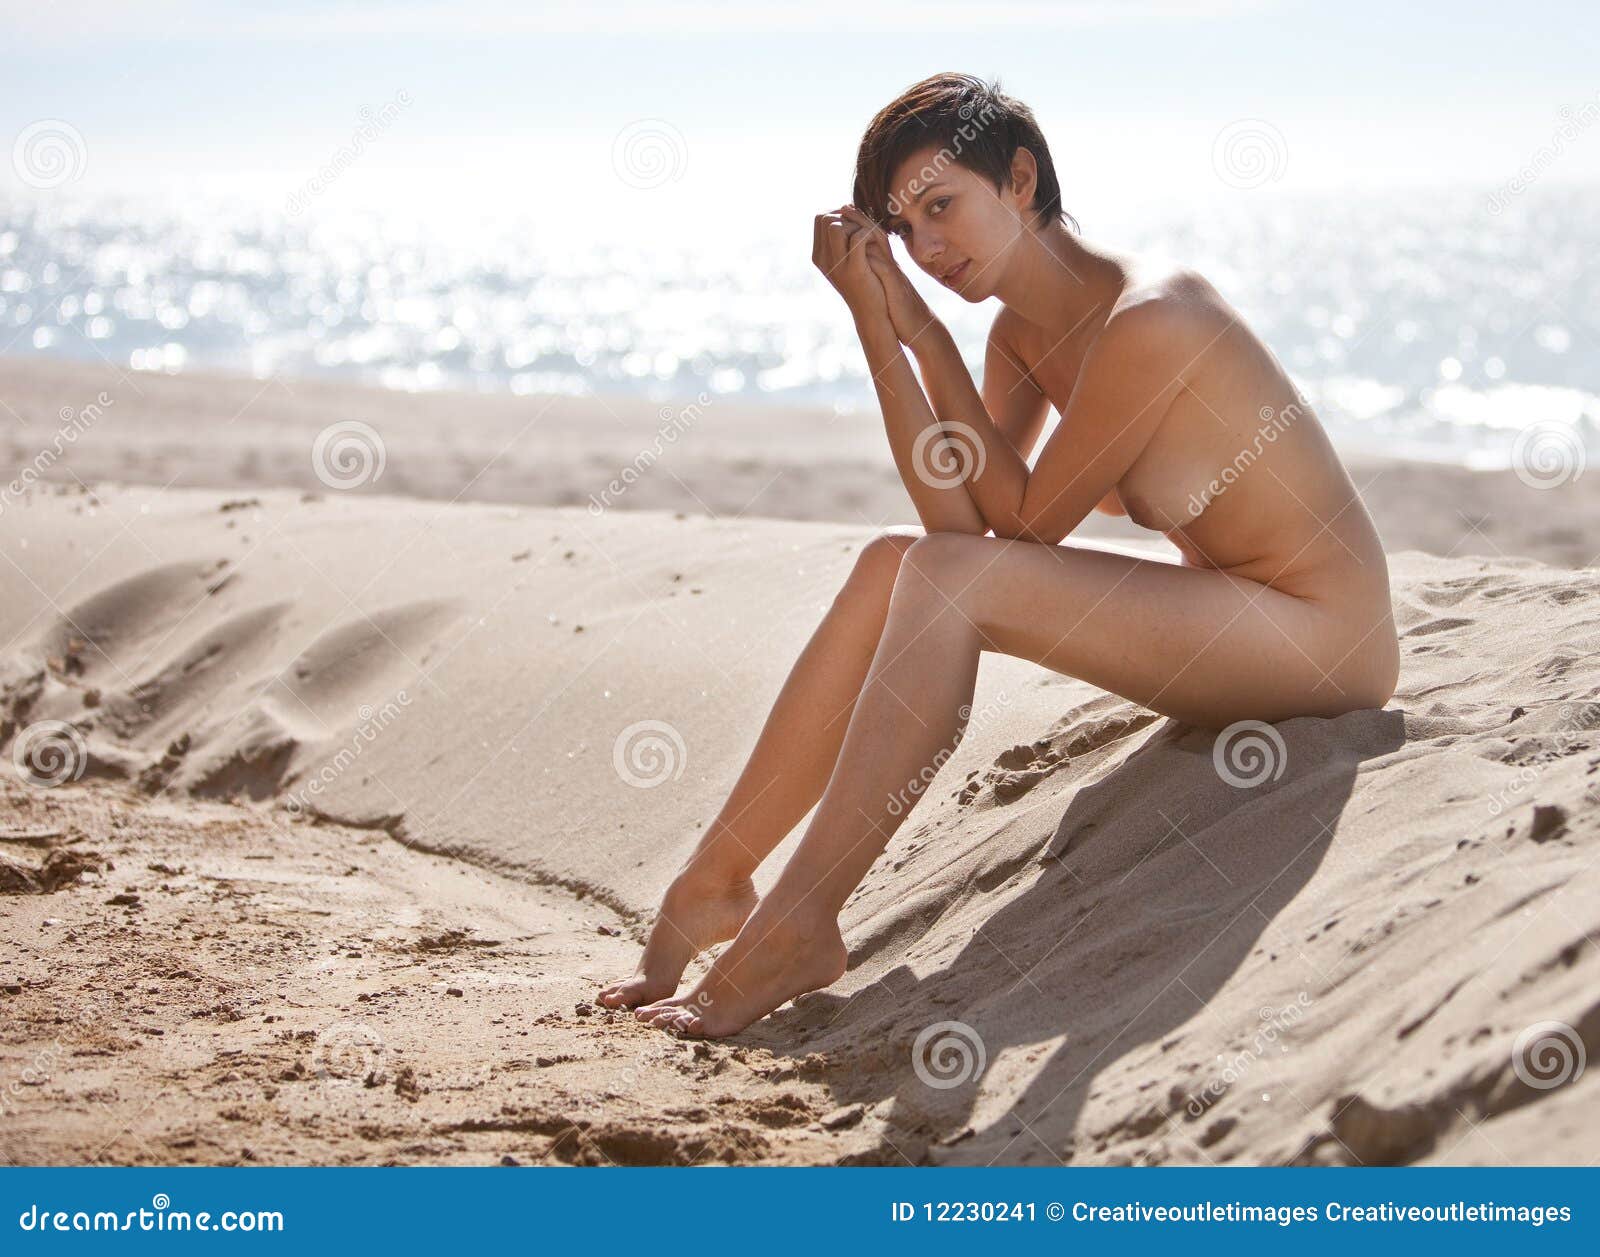 Beach girl nude Camel Toe